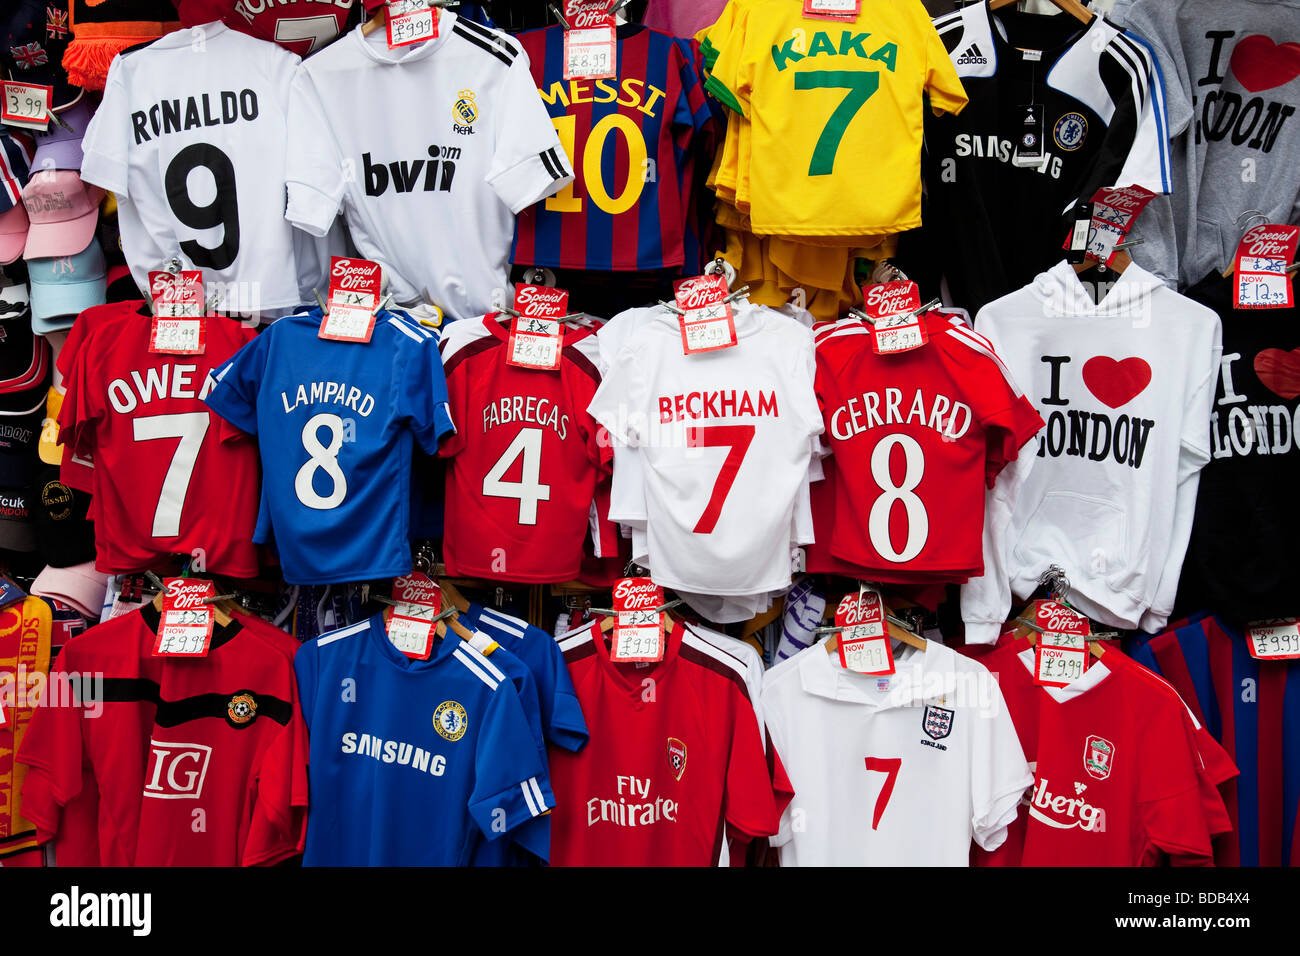 best price football shirts